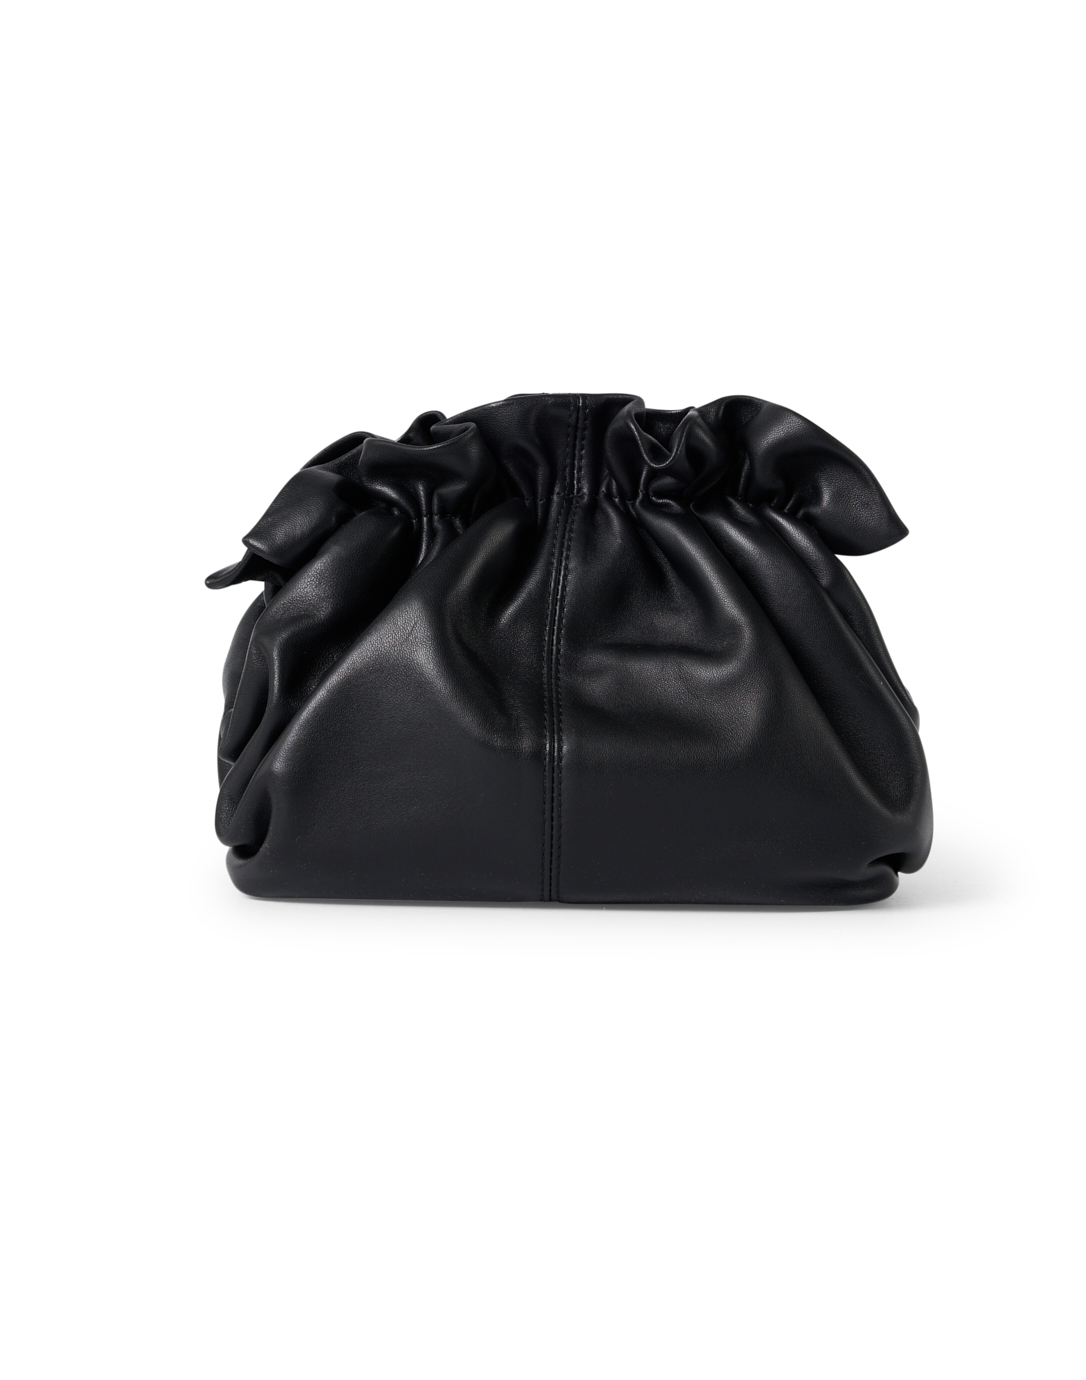 Bottega Veneta Knot Pleated Leather Clutch Bag